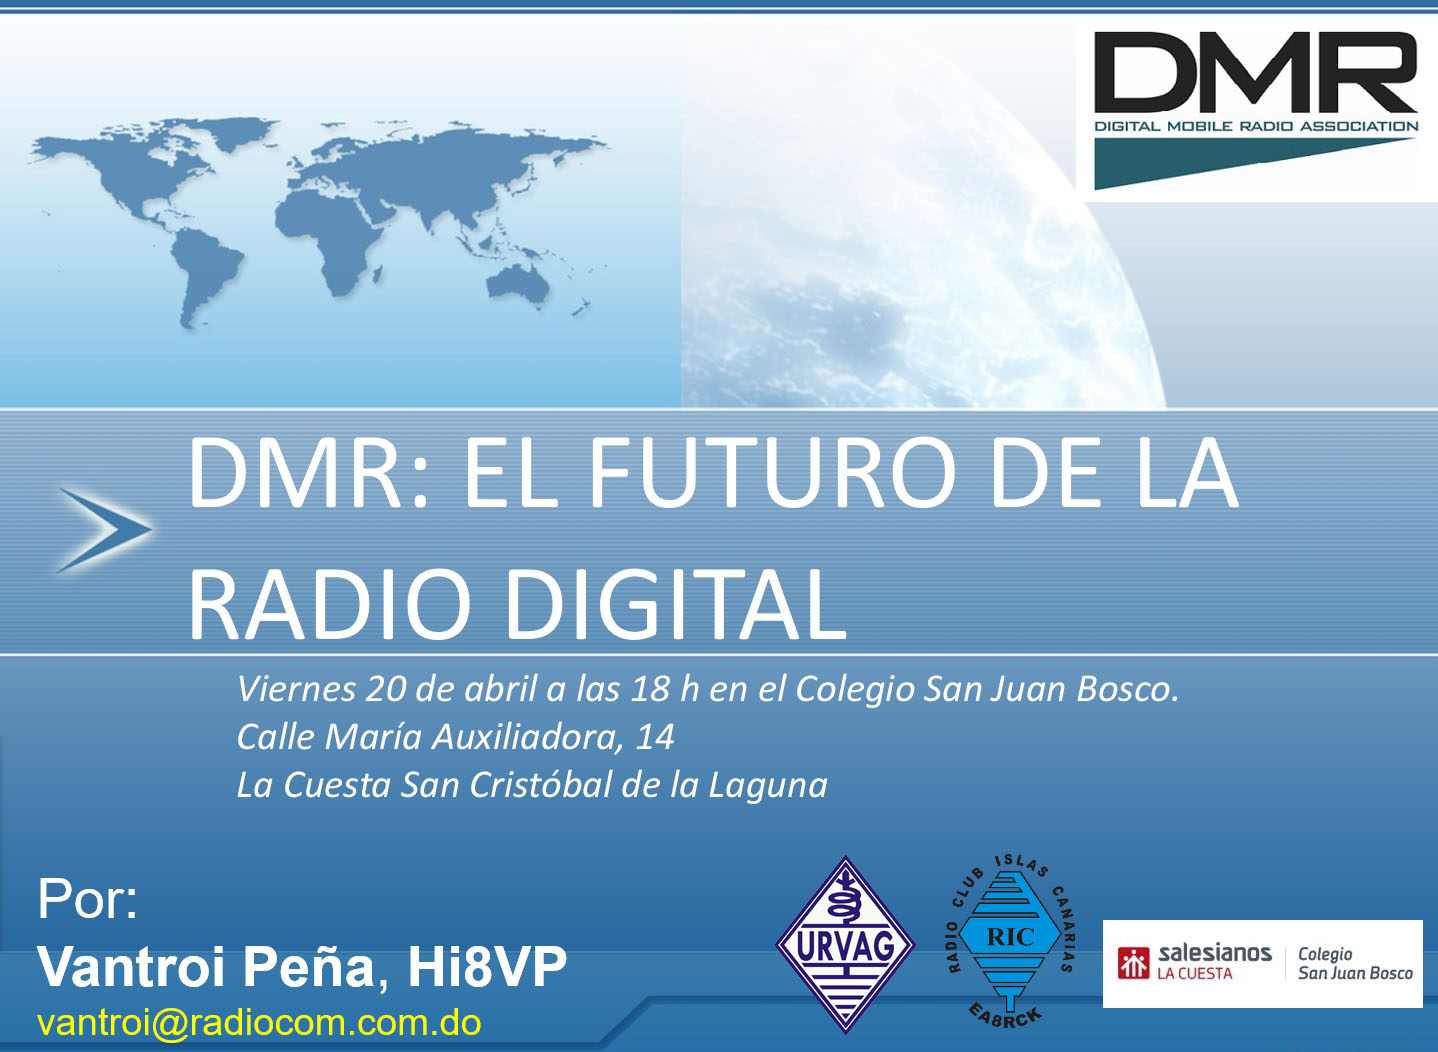 DMR: El futuro de la radio digital